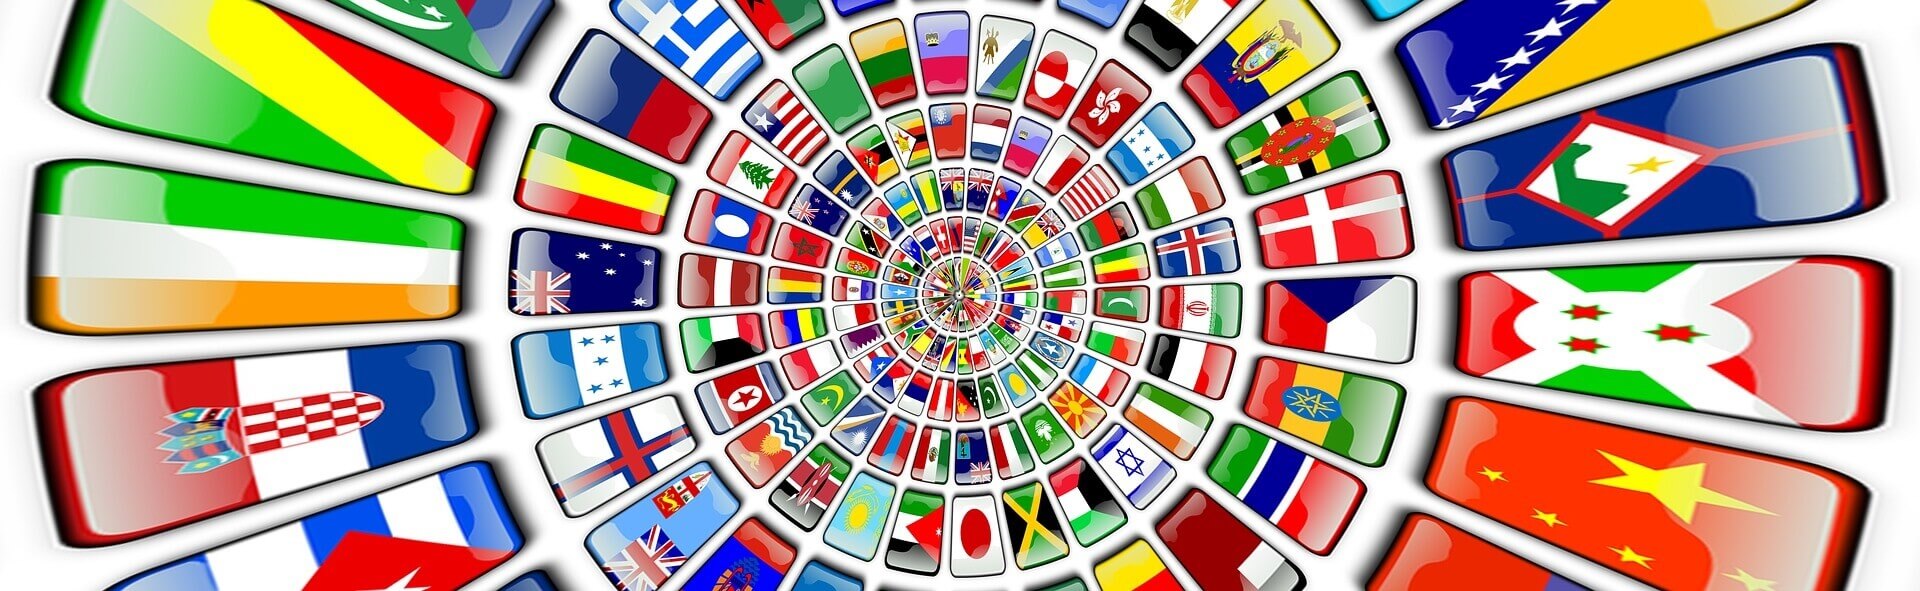 Картина красками флаги разных народов